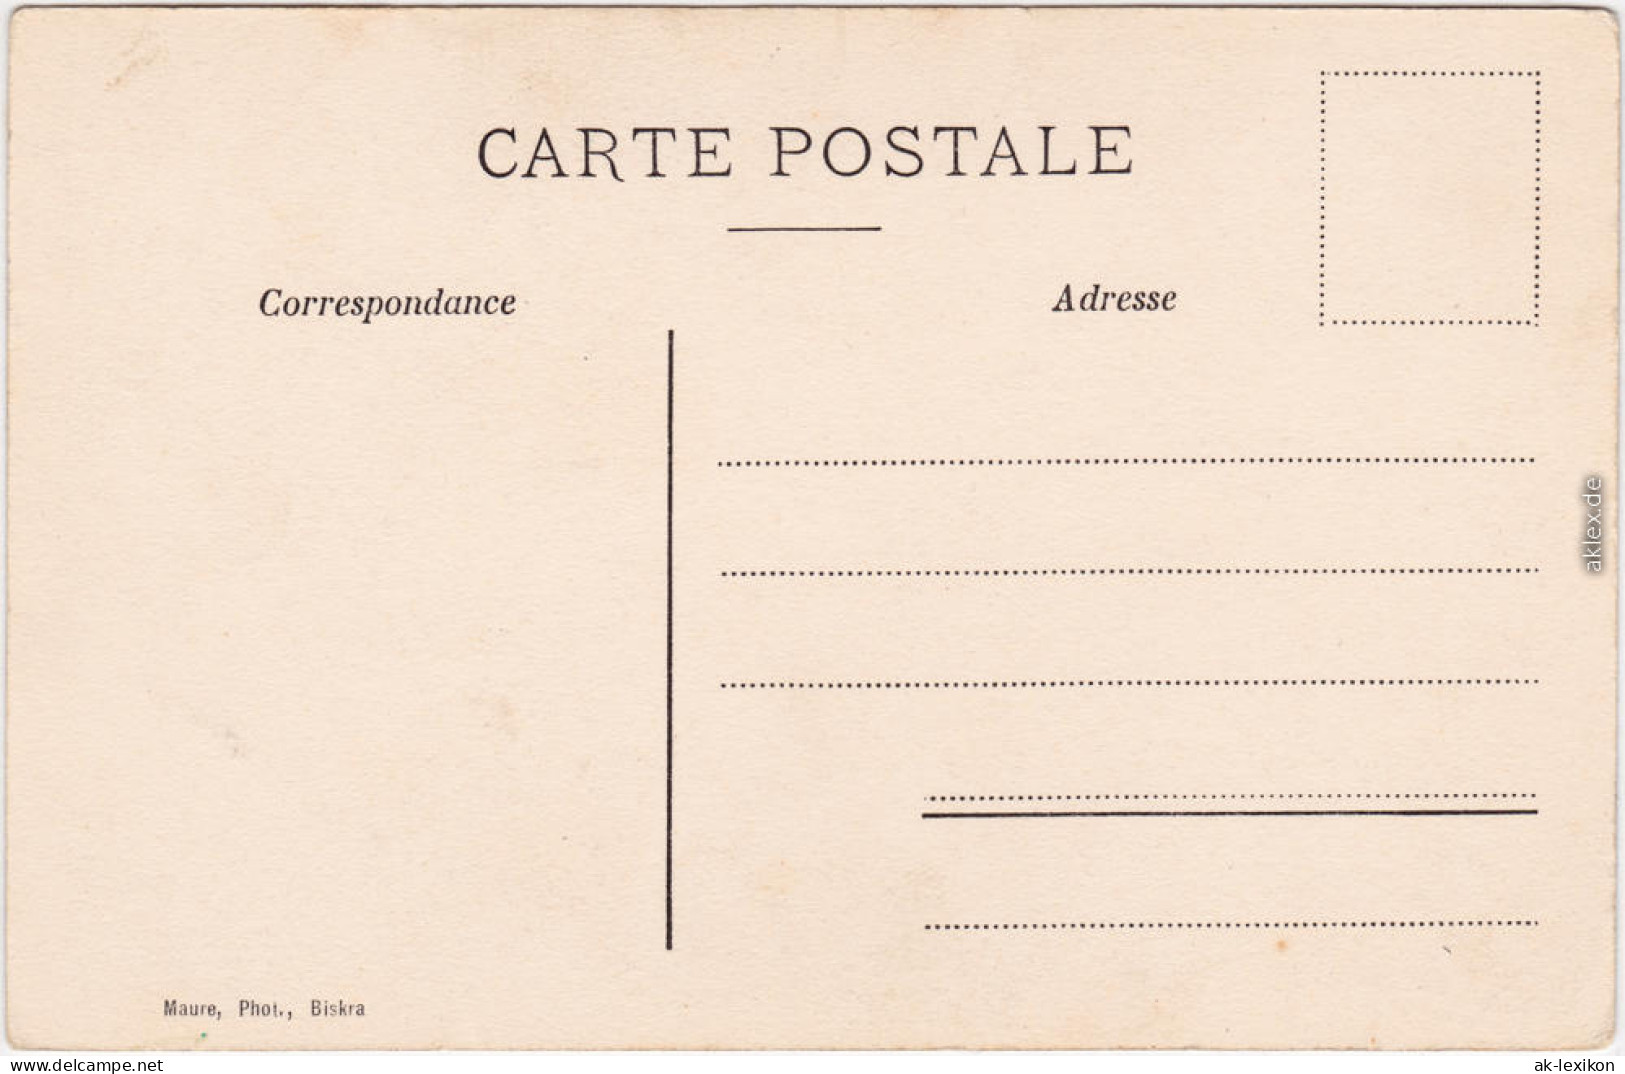 Biskra Biskira- بسكرة Partie Am Royal Hotel Algeria Algerien Postcard 1918 - Non Classés